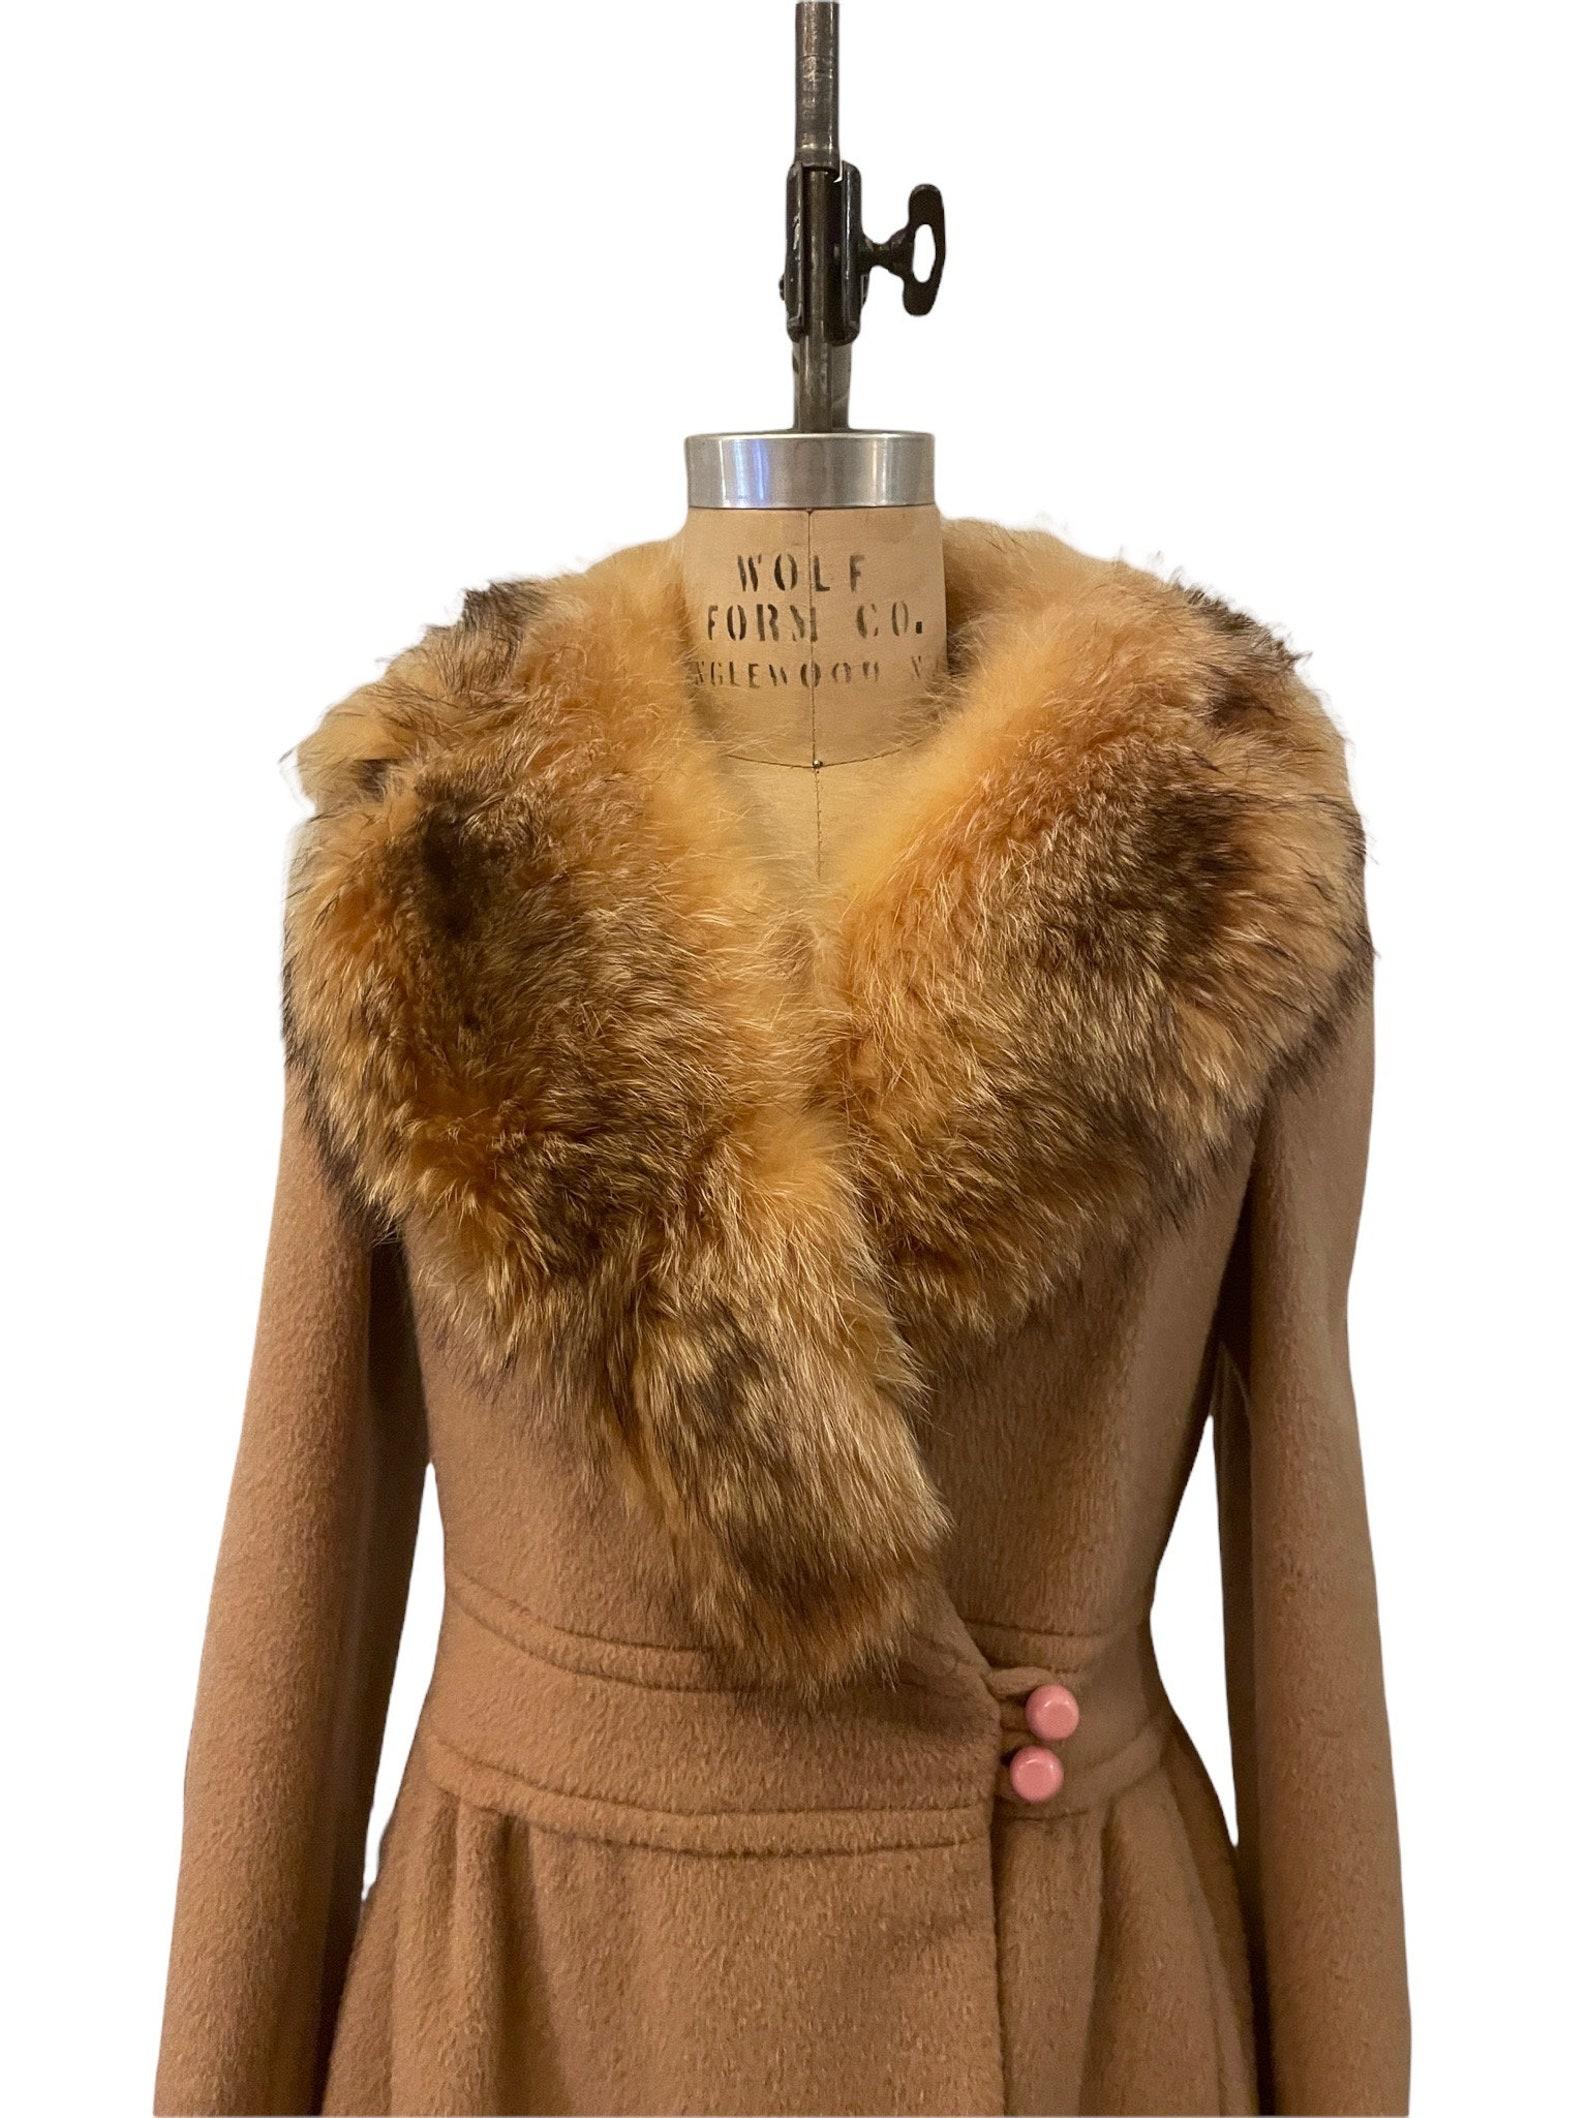 Women's Pierre Cardin Wool Princess Coat with Fox Fur Collar, Circa 1970s For Sale